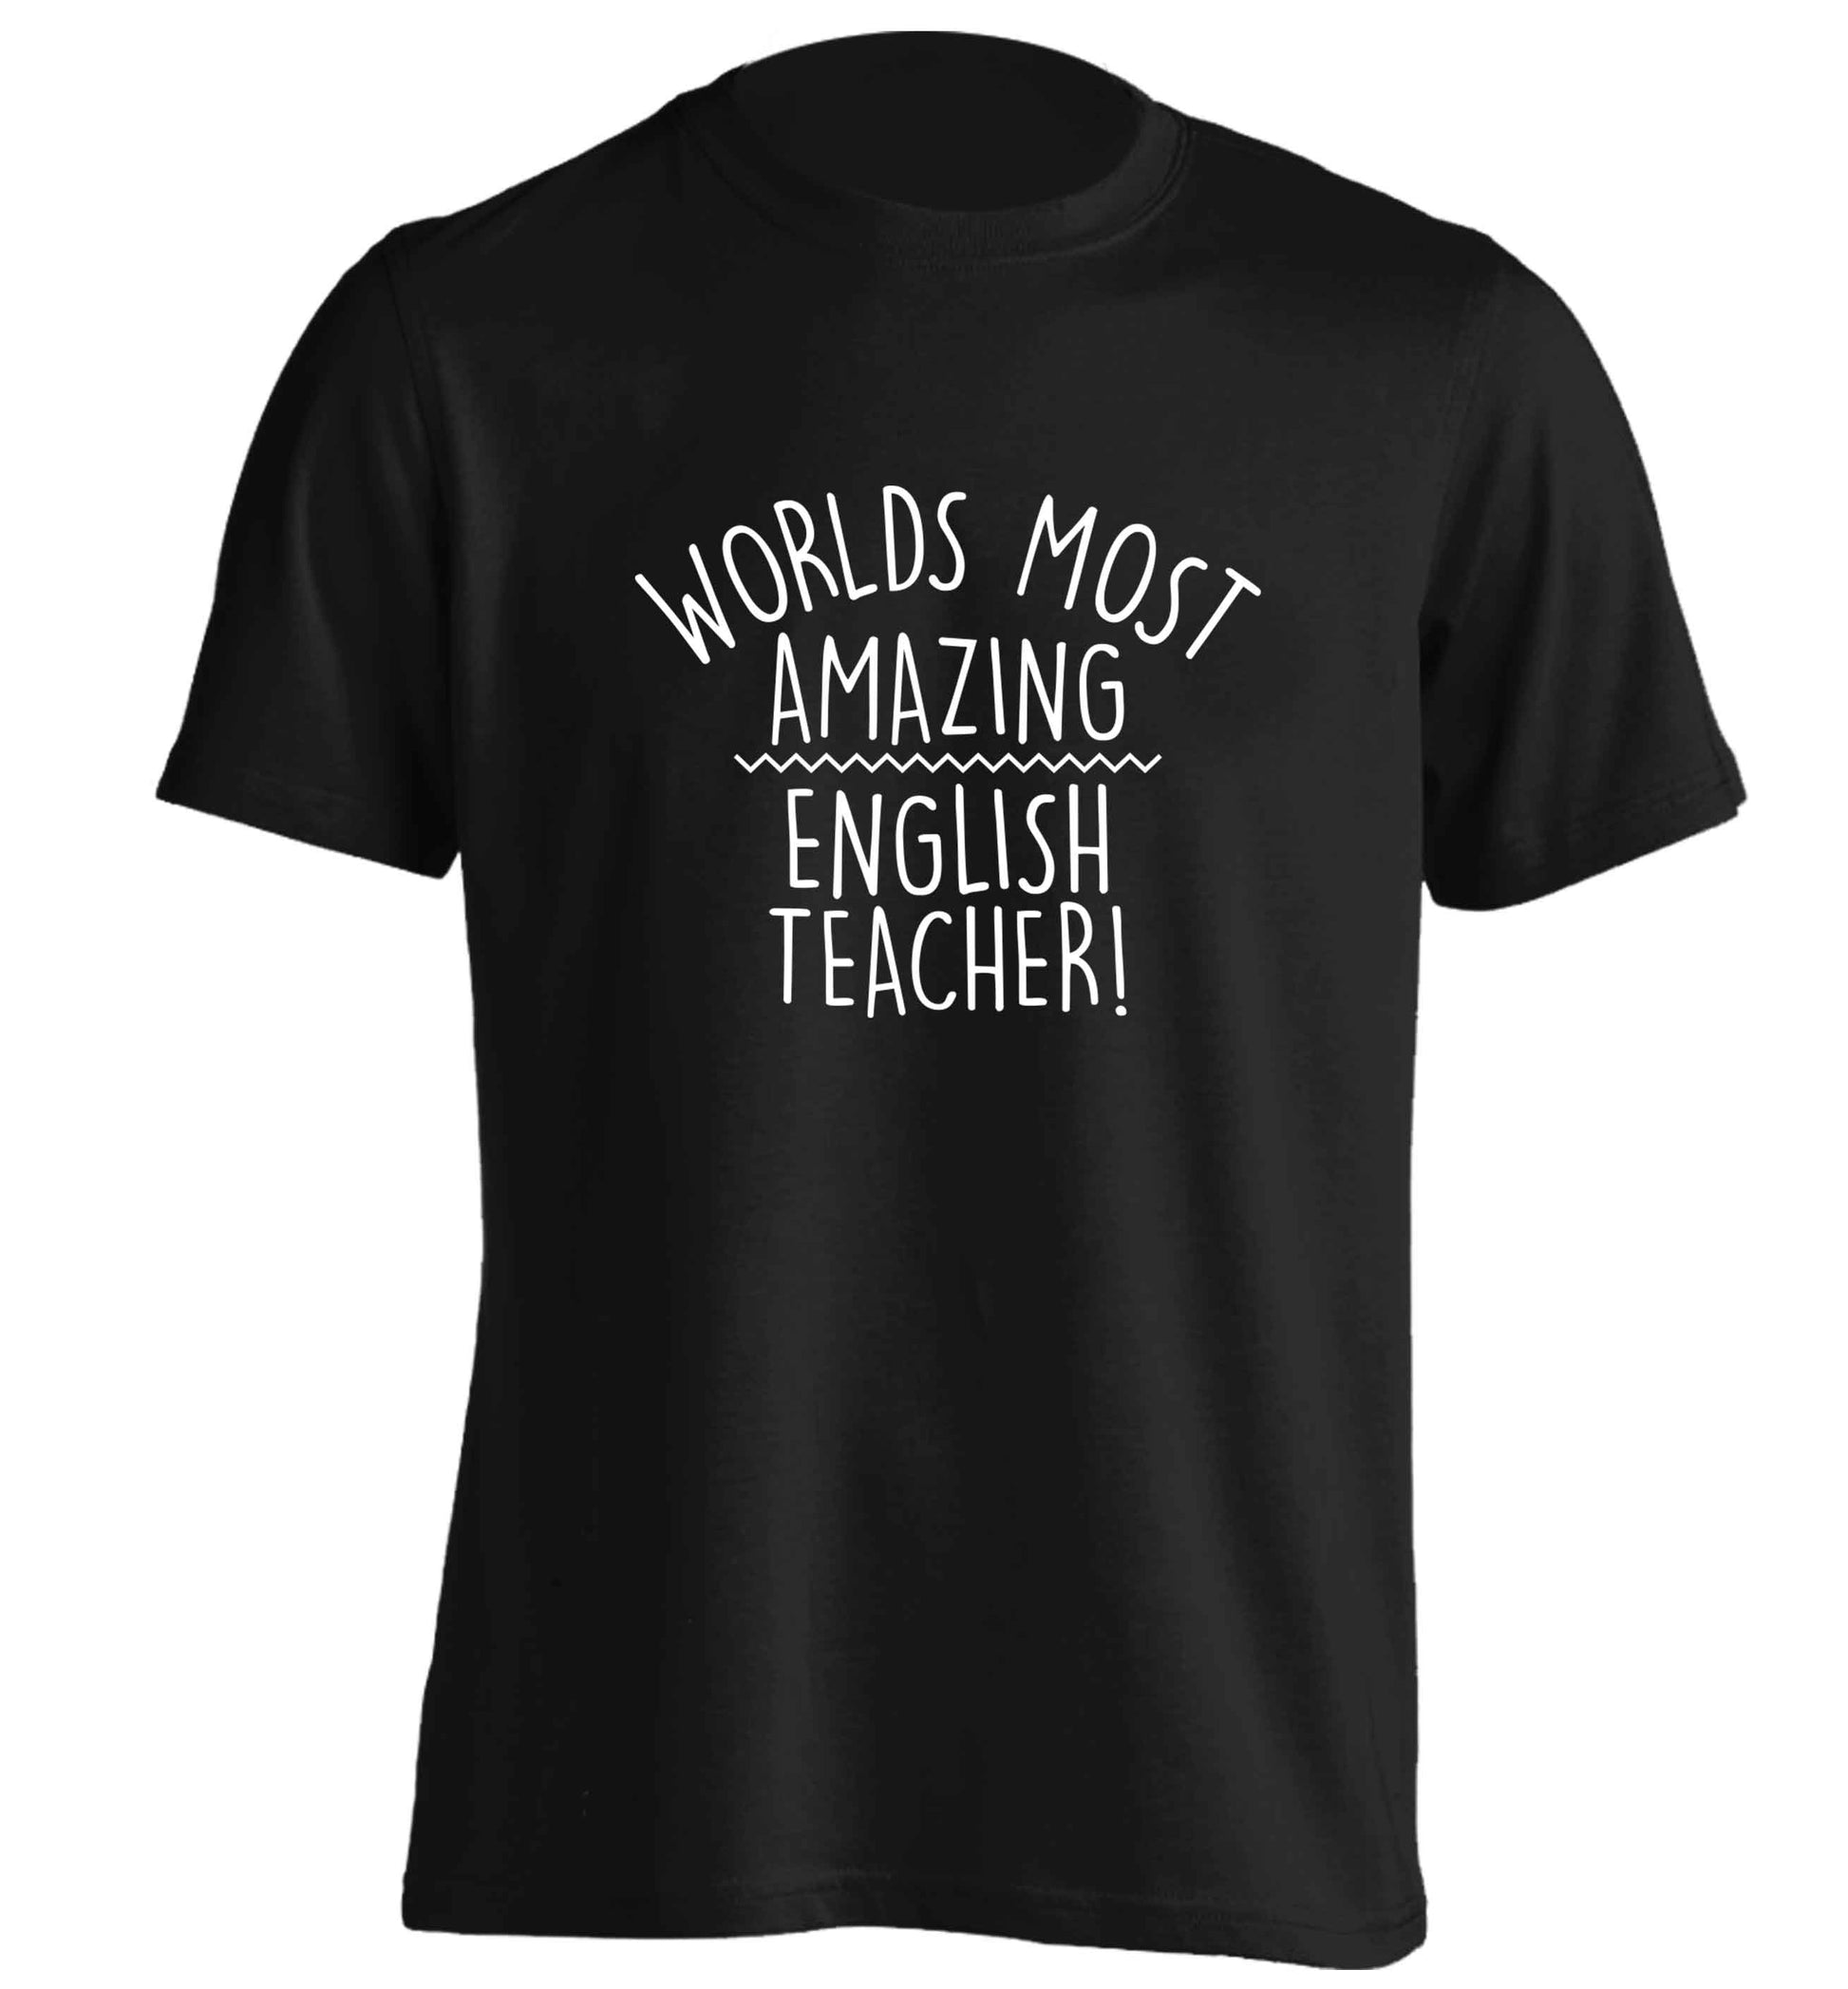 Worlds most amazing English teacher adults unisex black Tshirt 2XL